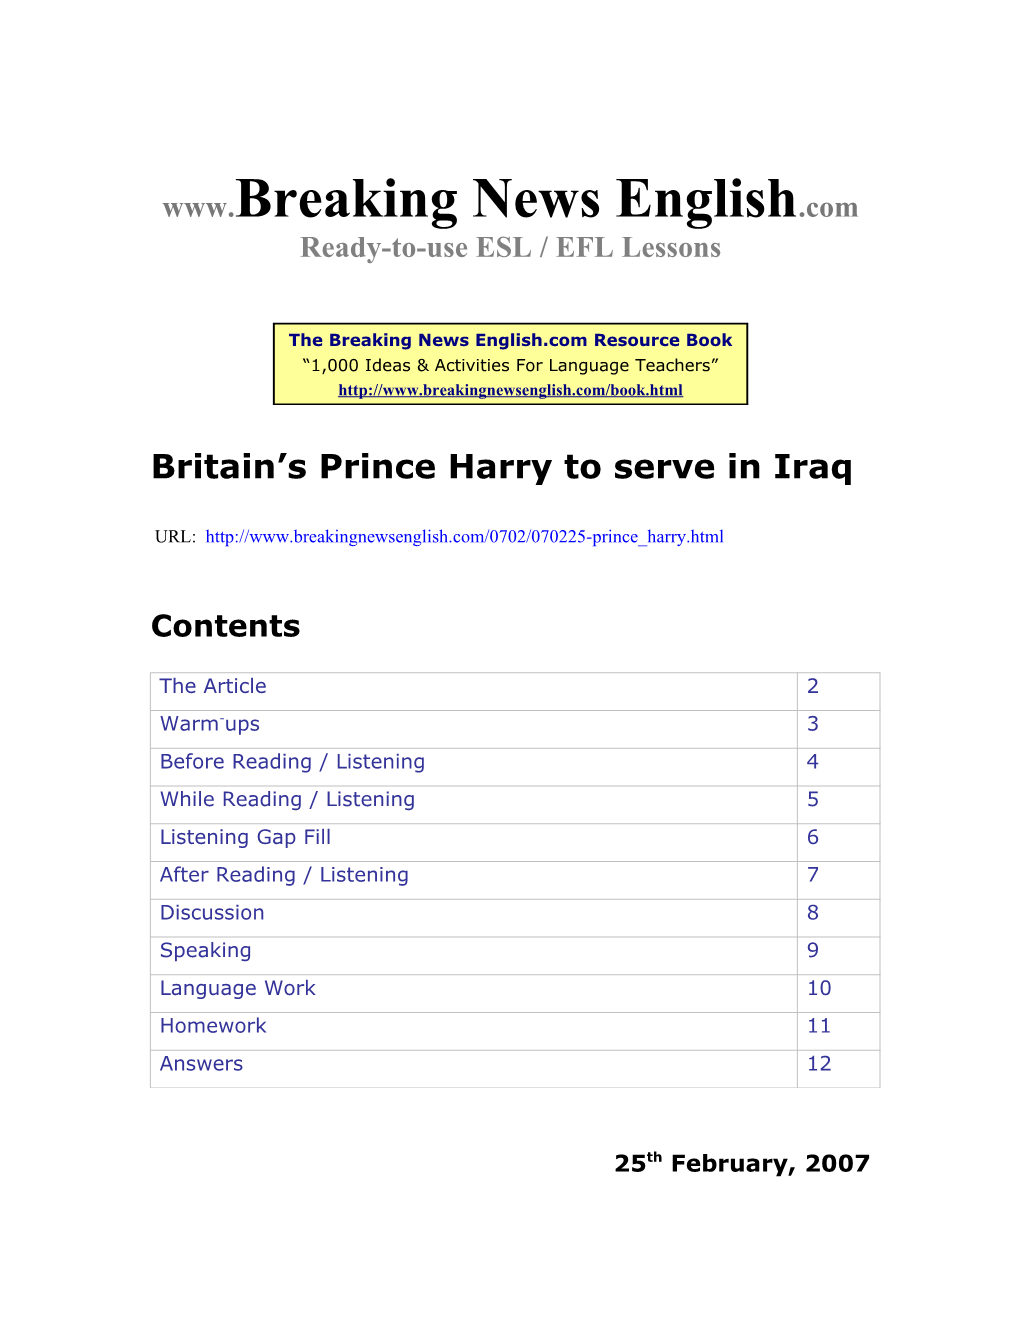 Britain's Prince Harry to Serve in Iraq